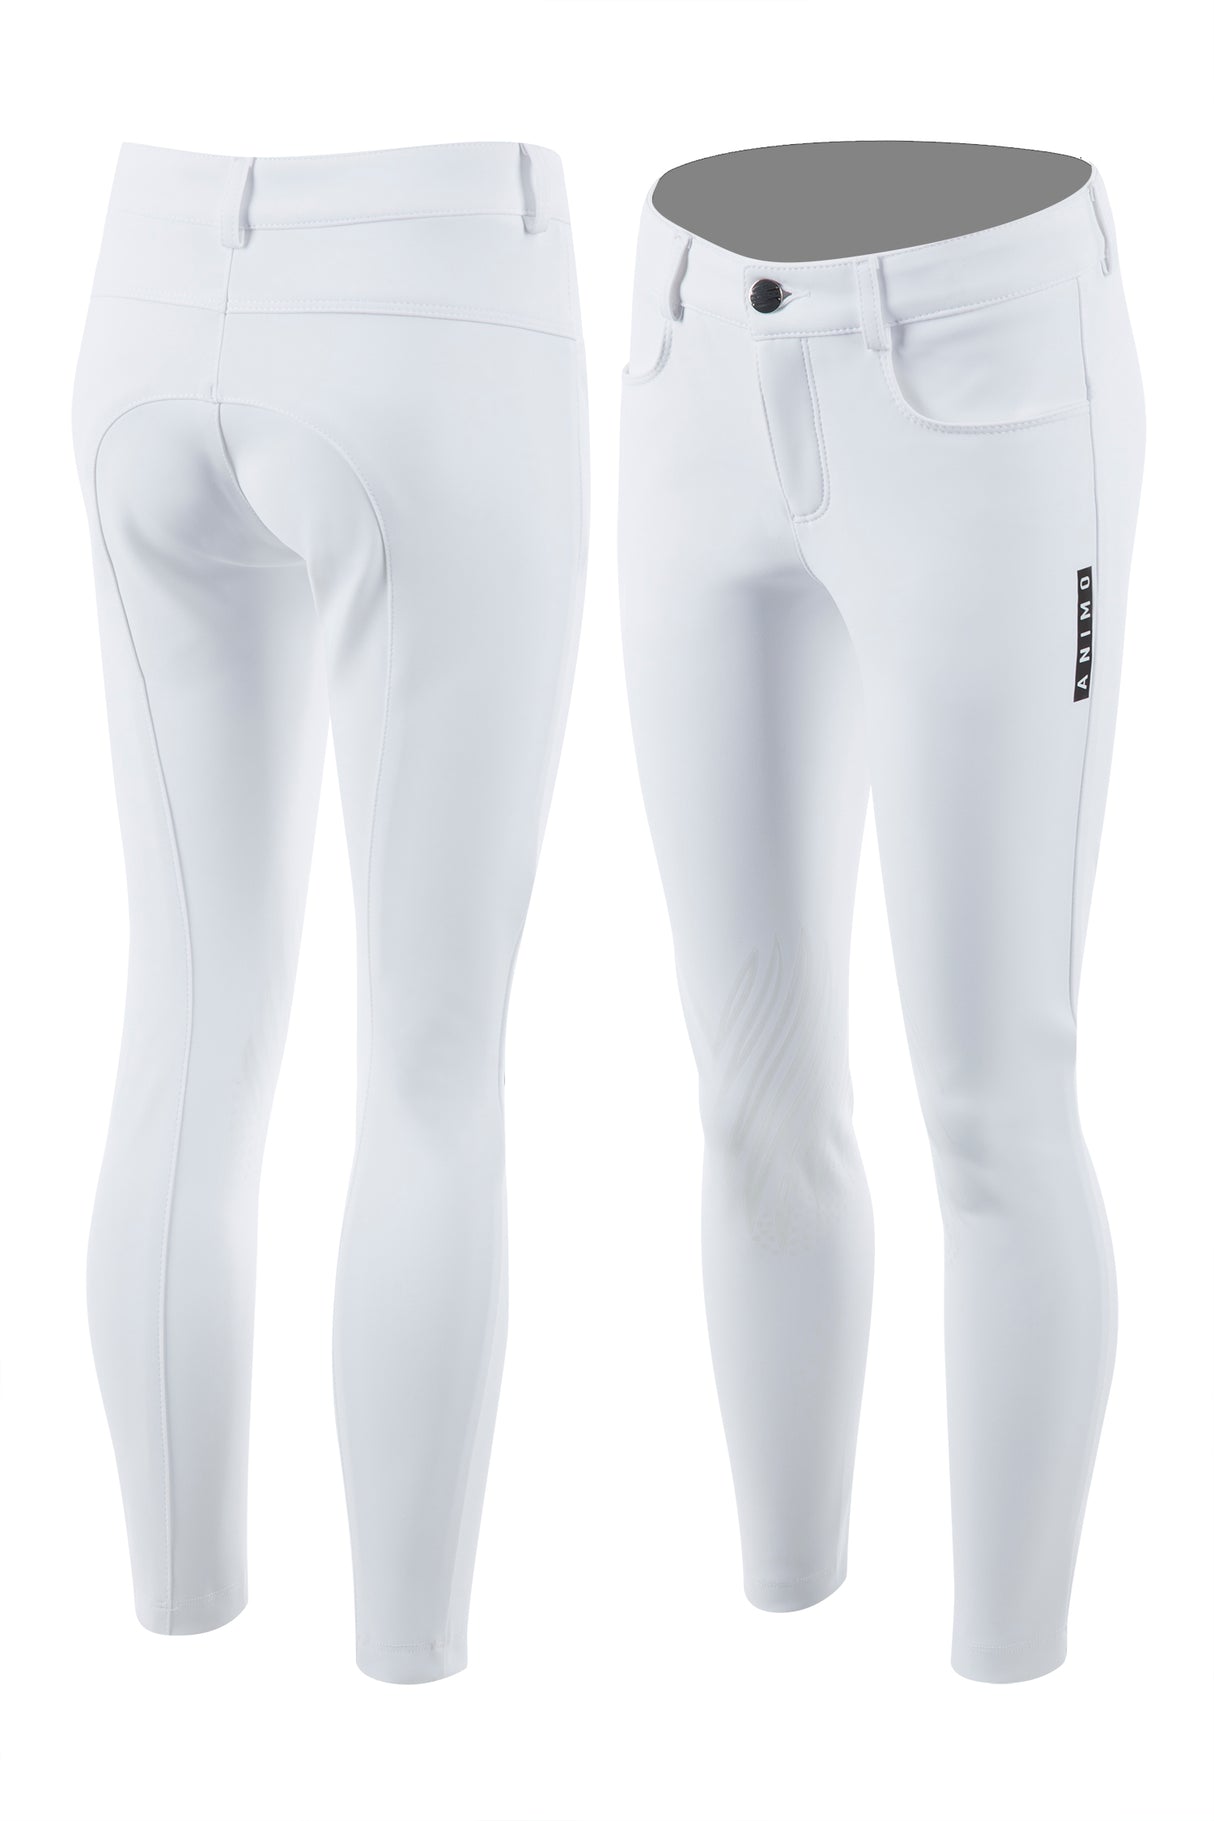 Pantalone da gara unisex da bambino modello Need 24S Animo bianco